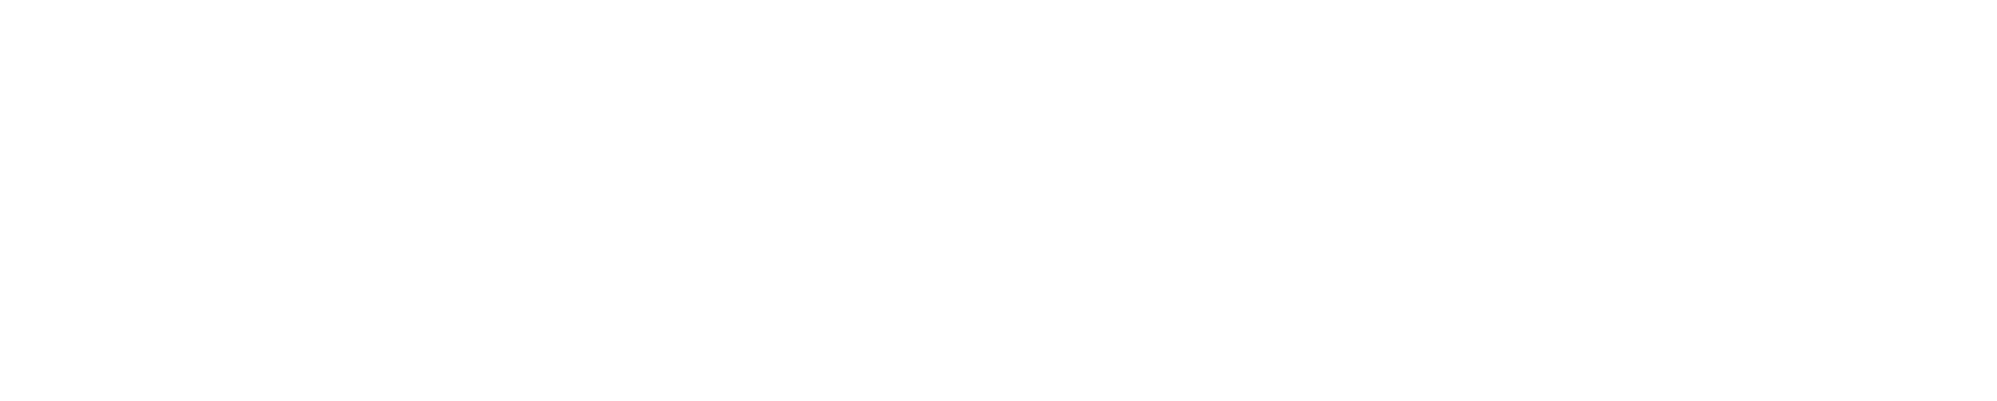 KickbackJS